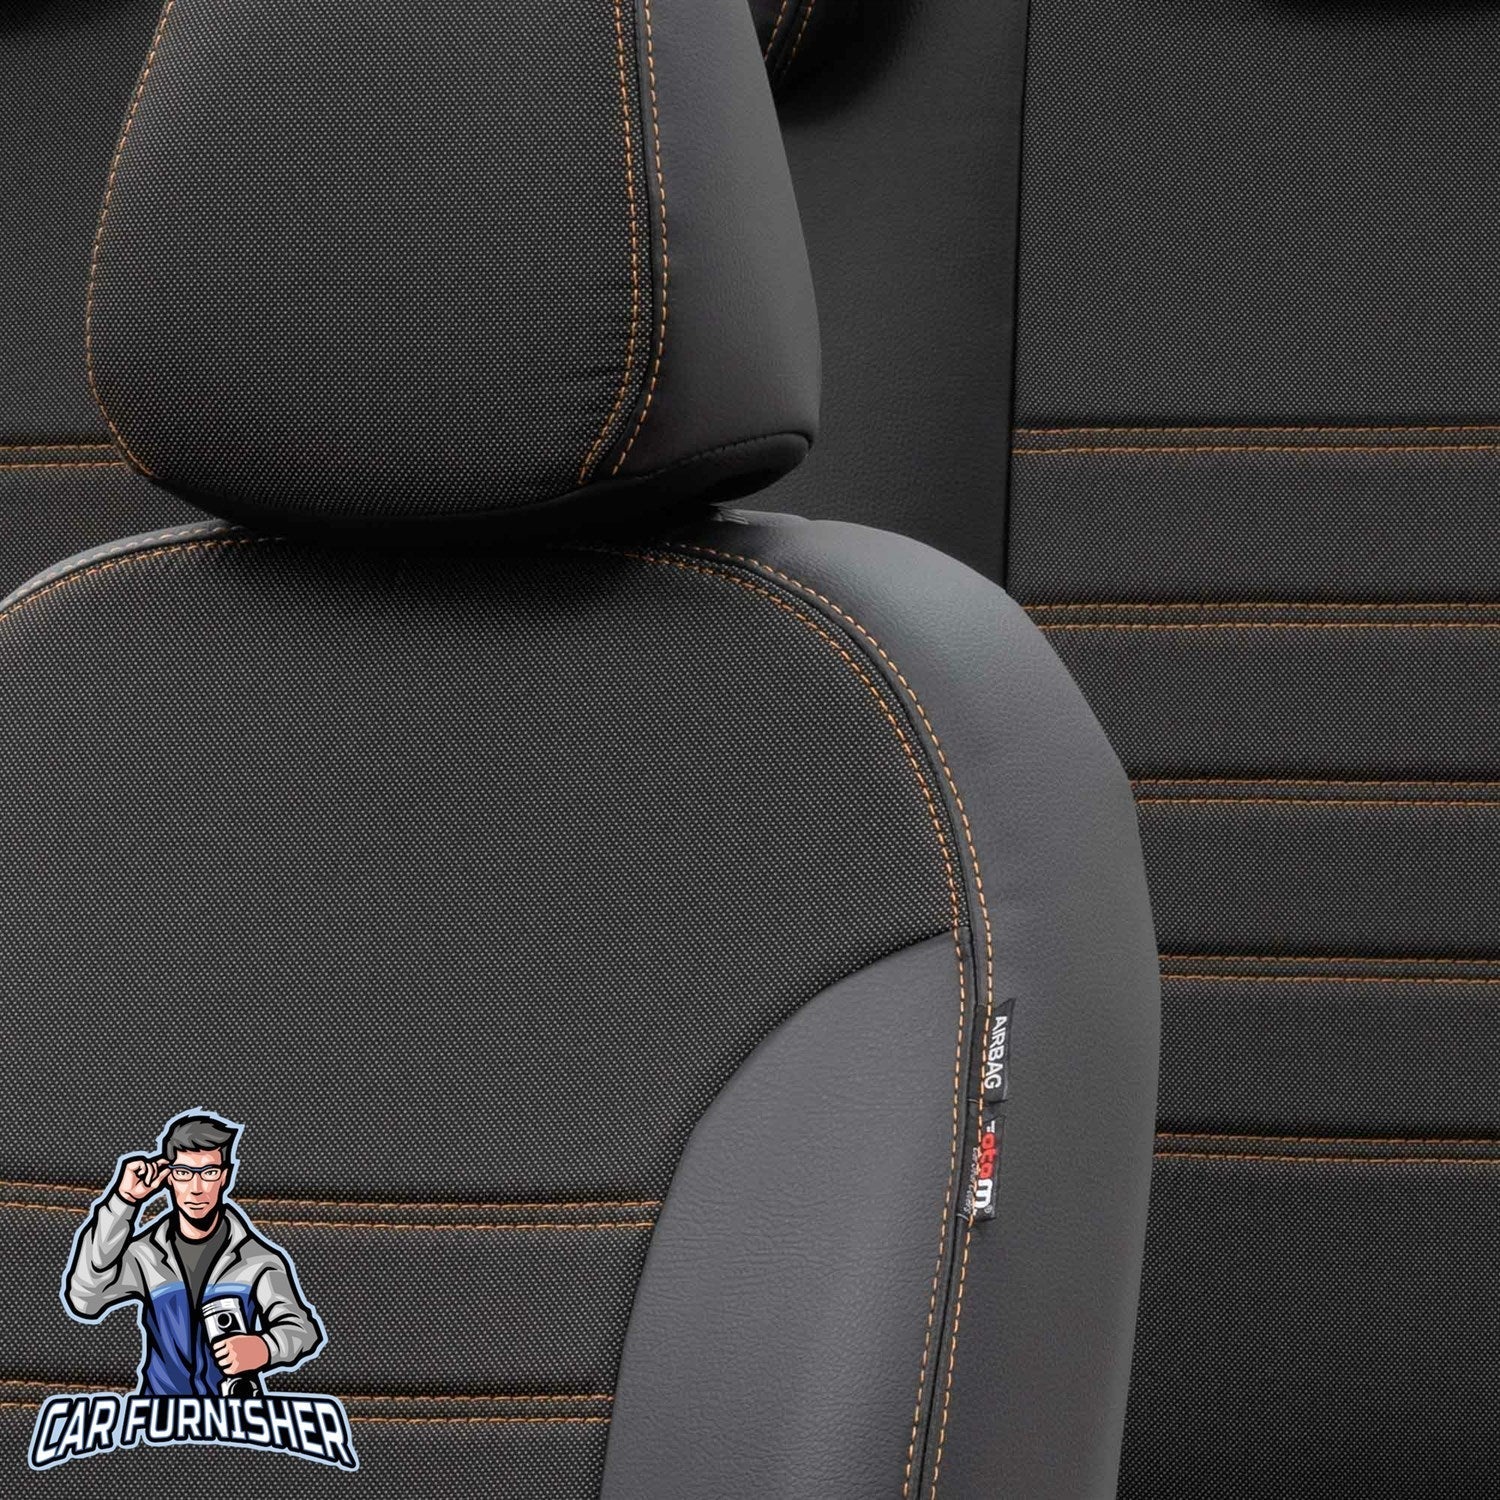 Volvo S90 Seat Cover Paris Leather & Jacquard Design Dark Beige Leather & Jacquard Fabric